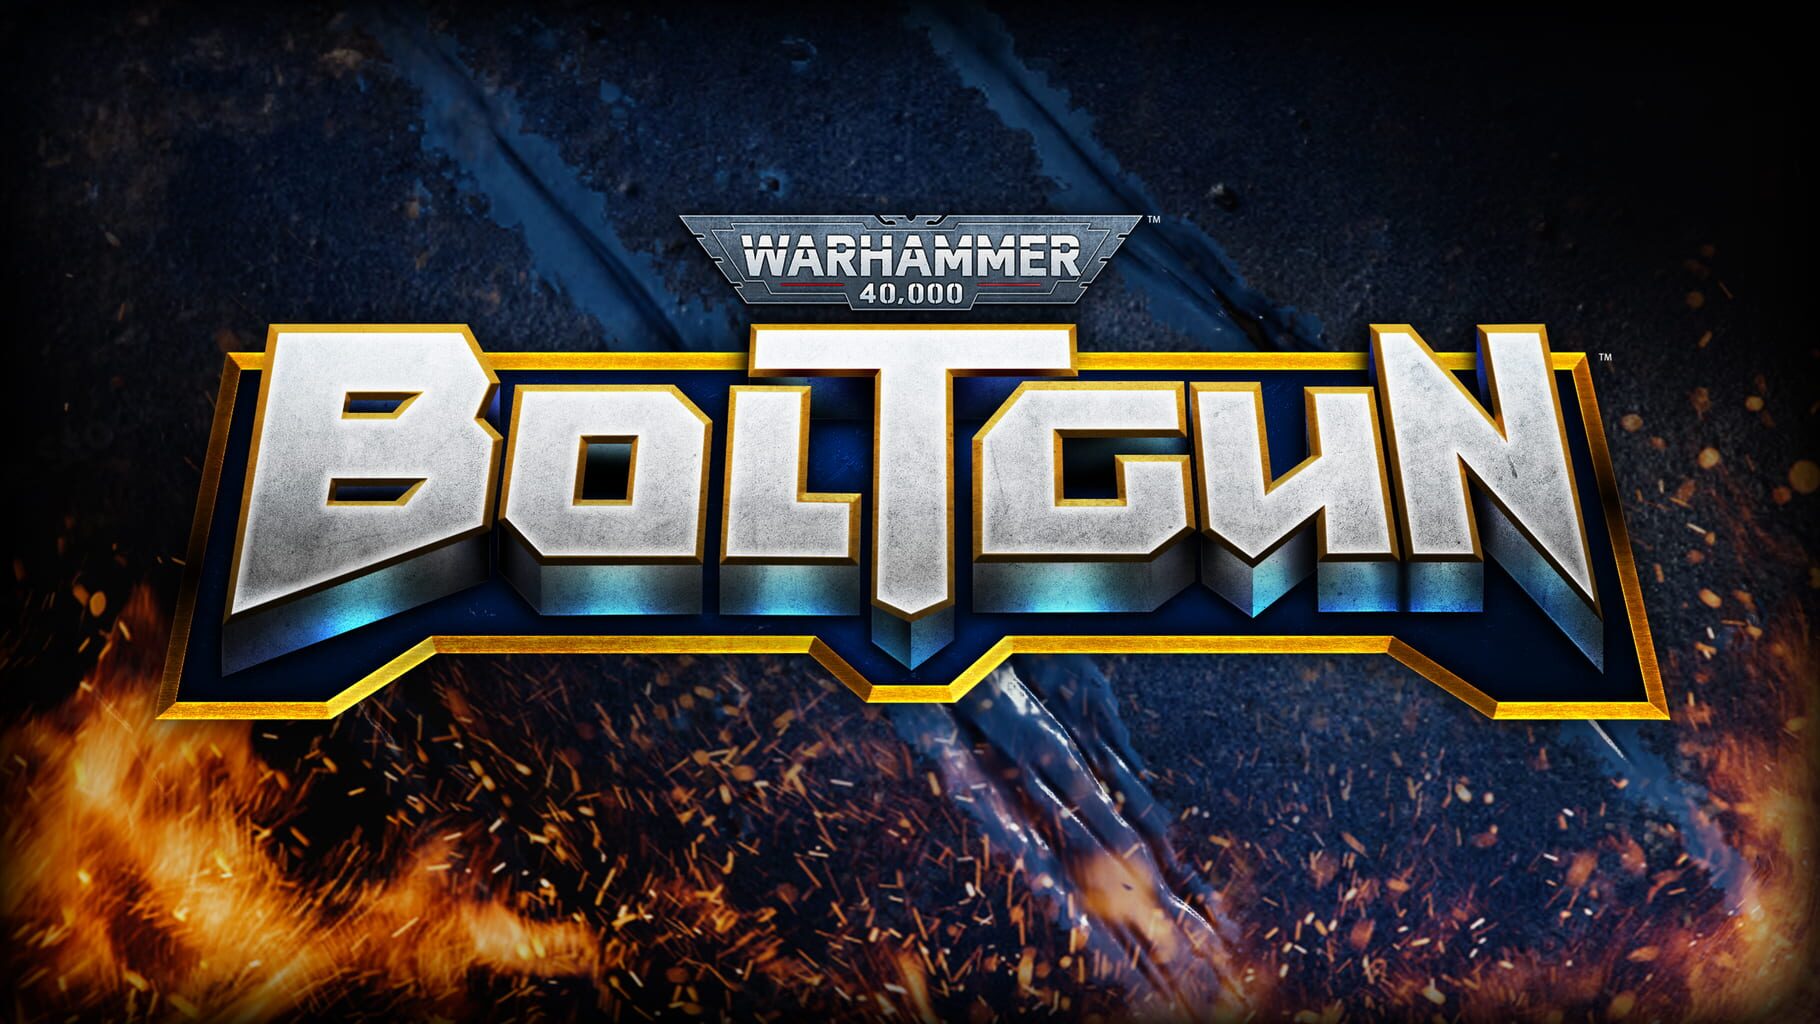 Artwork for Warhammer 40,000: Boltgun